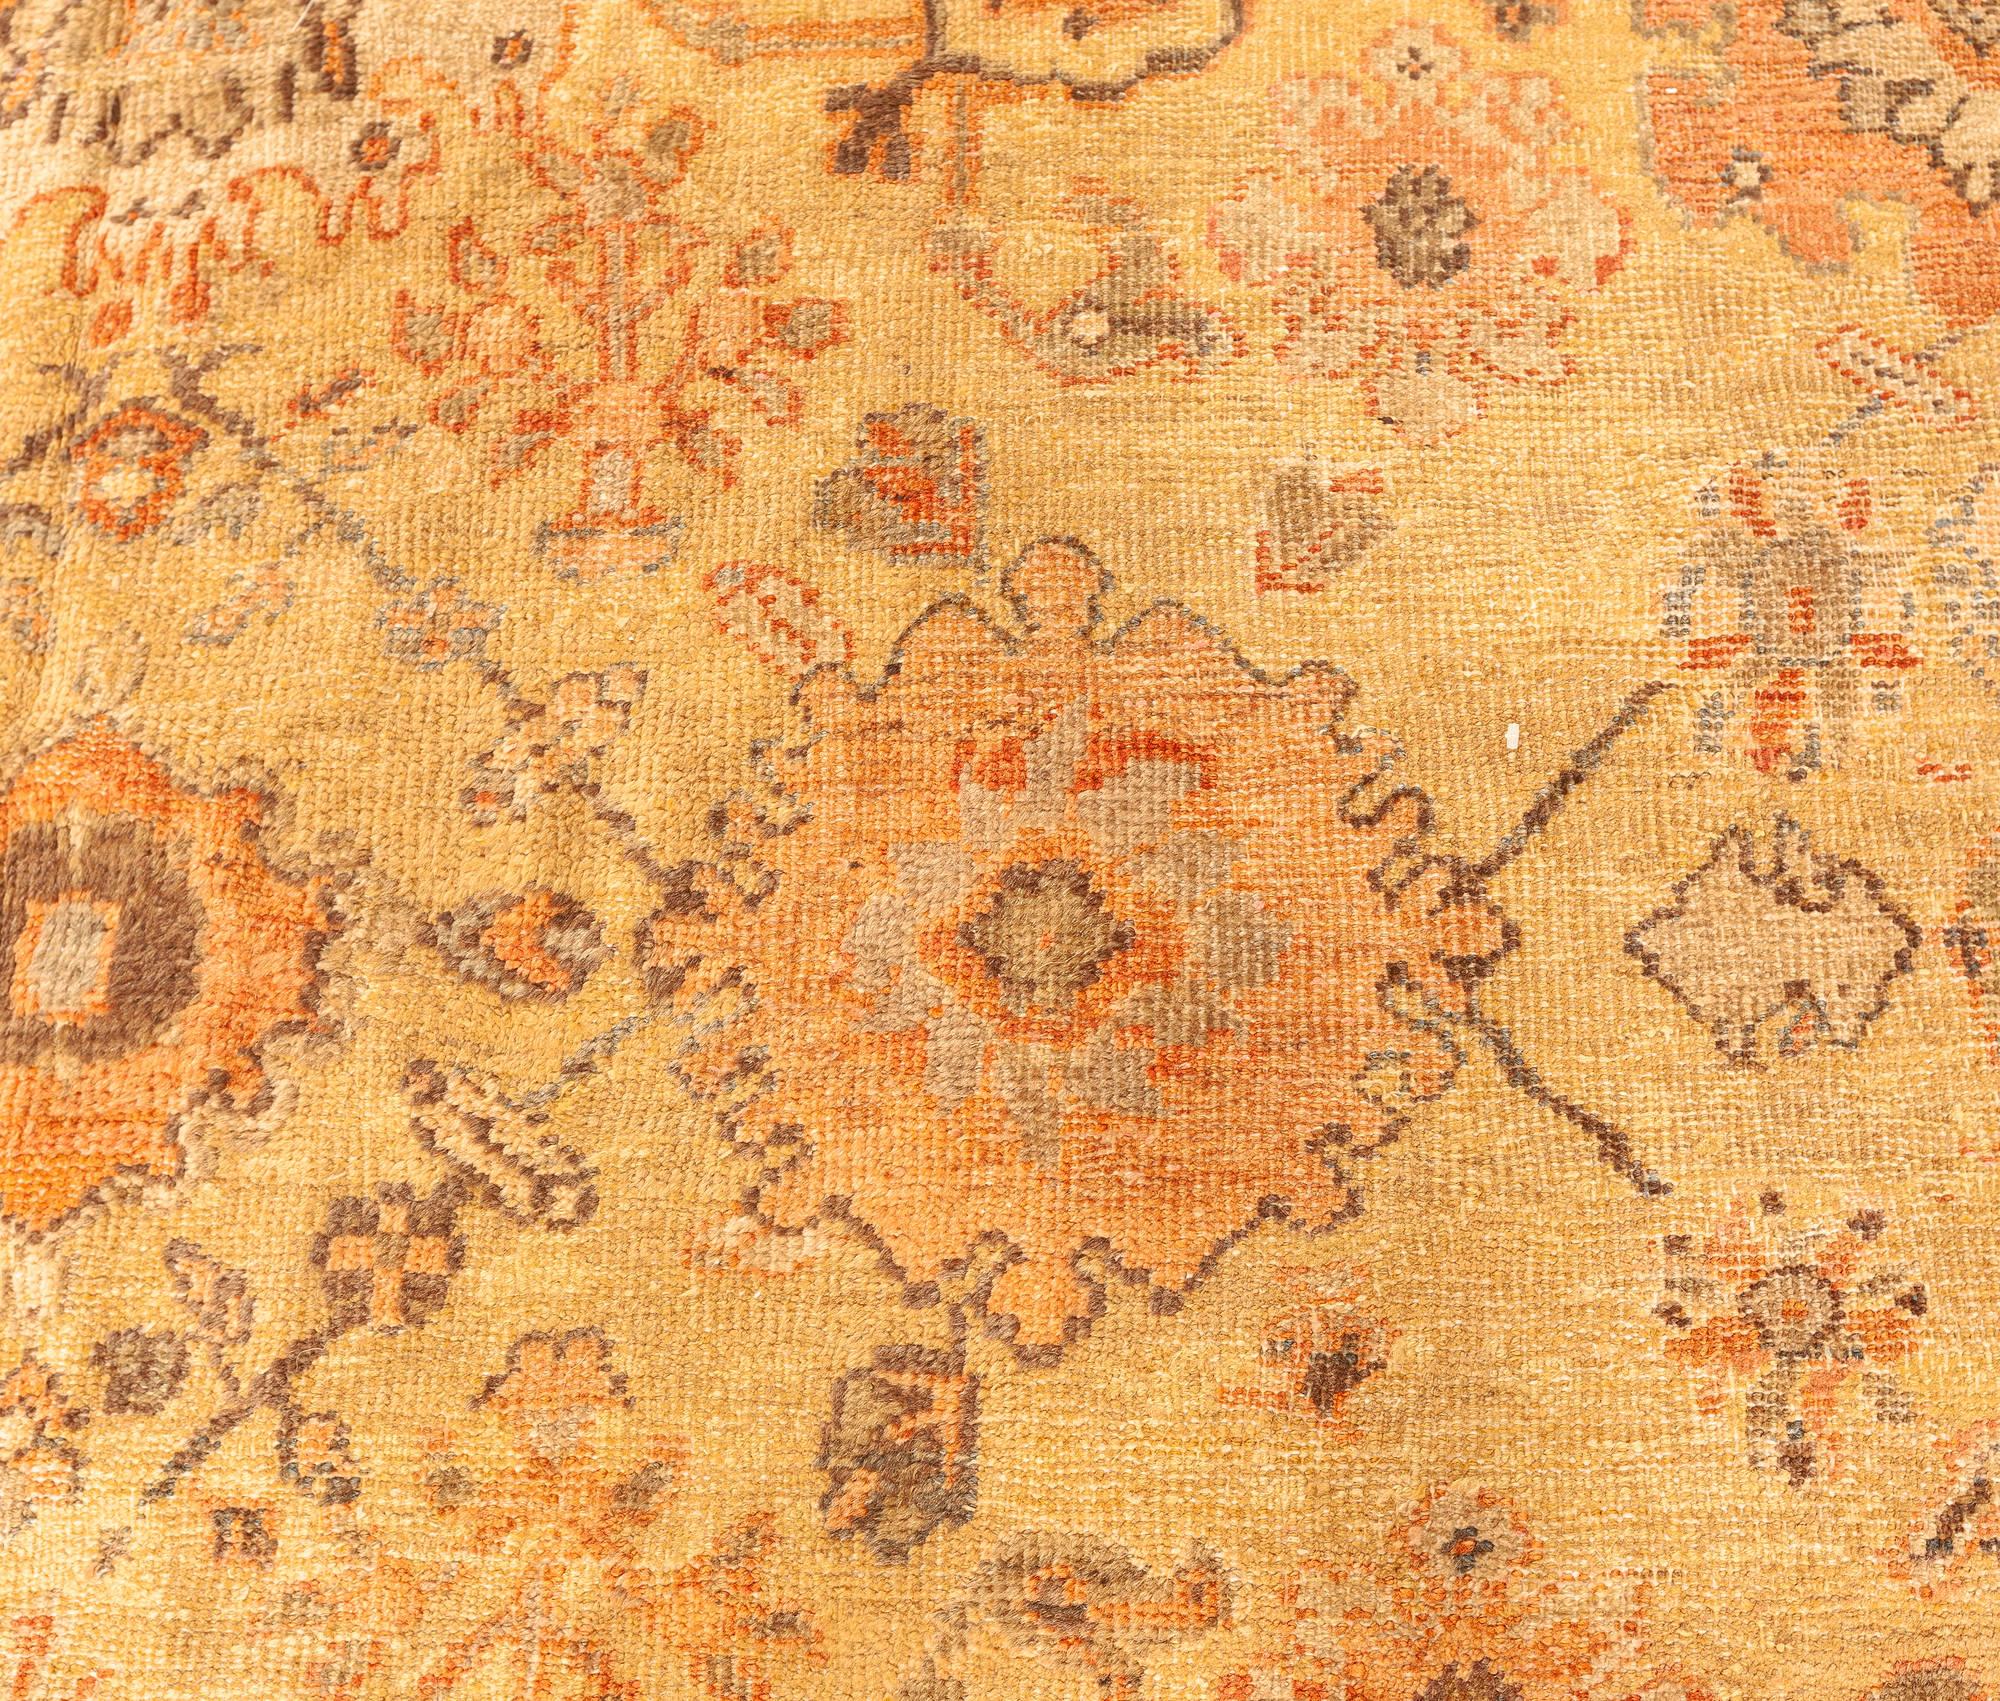 19th century Persian Sultanabad Botanic handmade wool rug
Size: 8'4